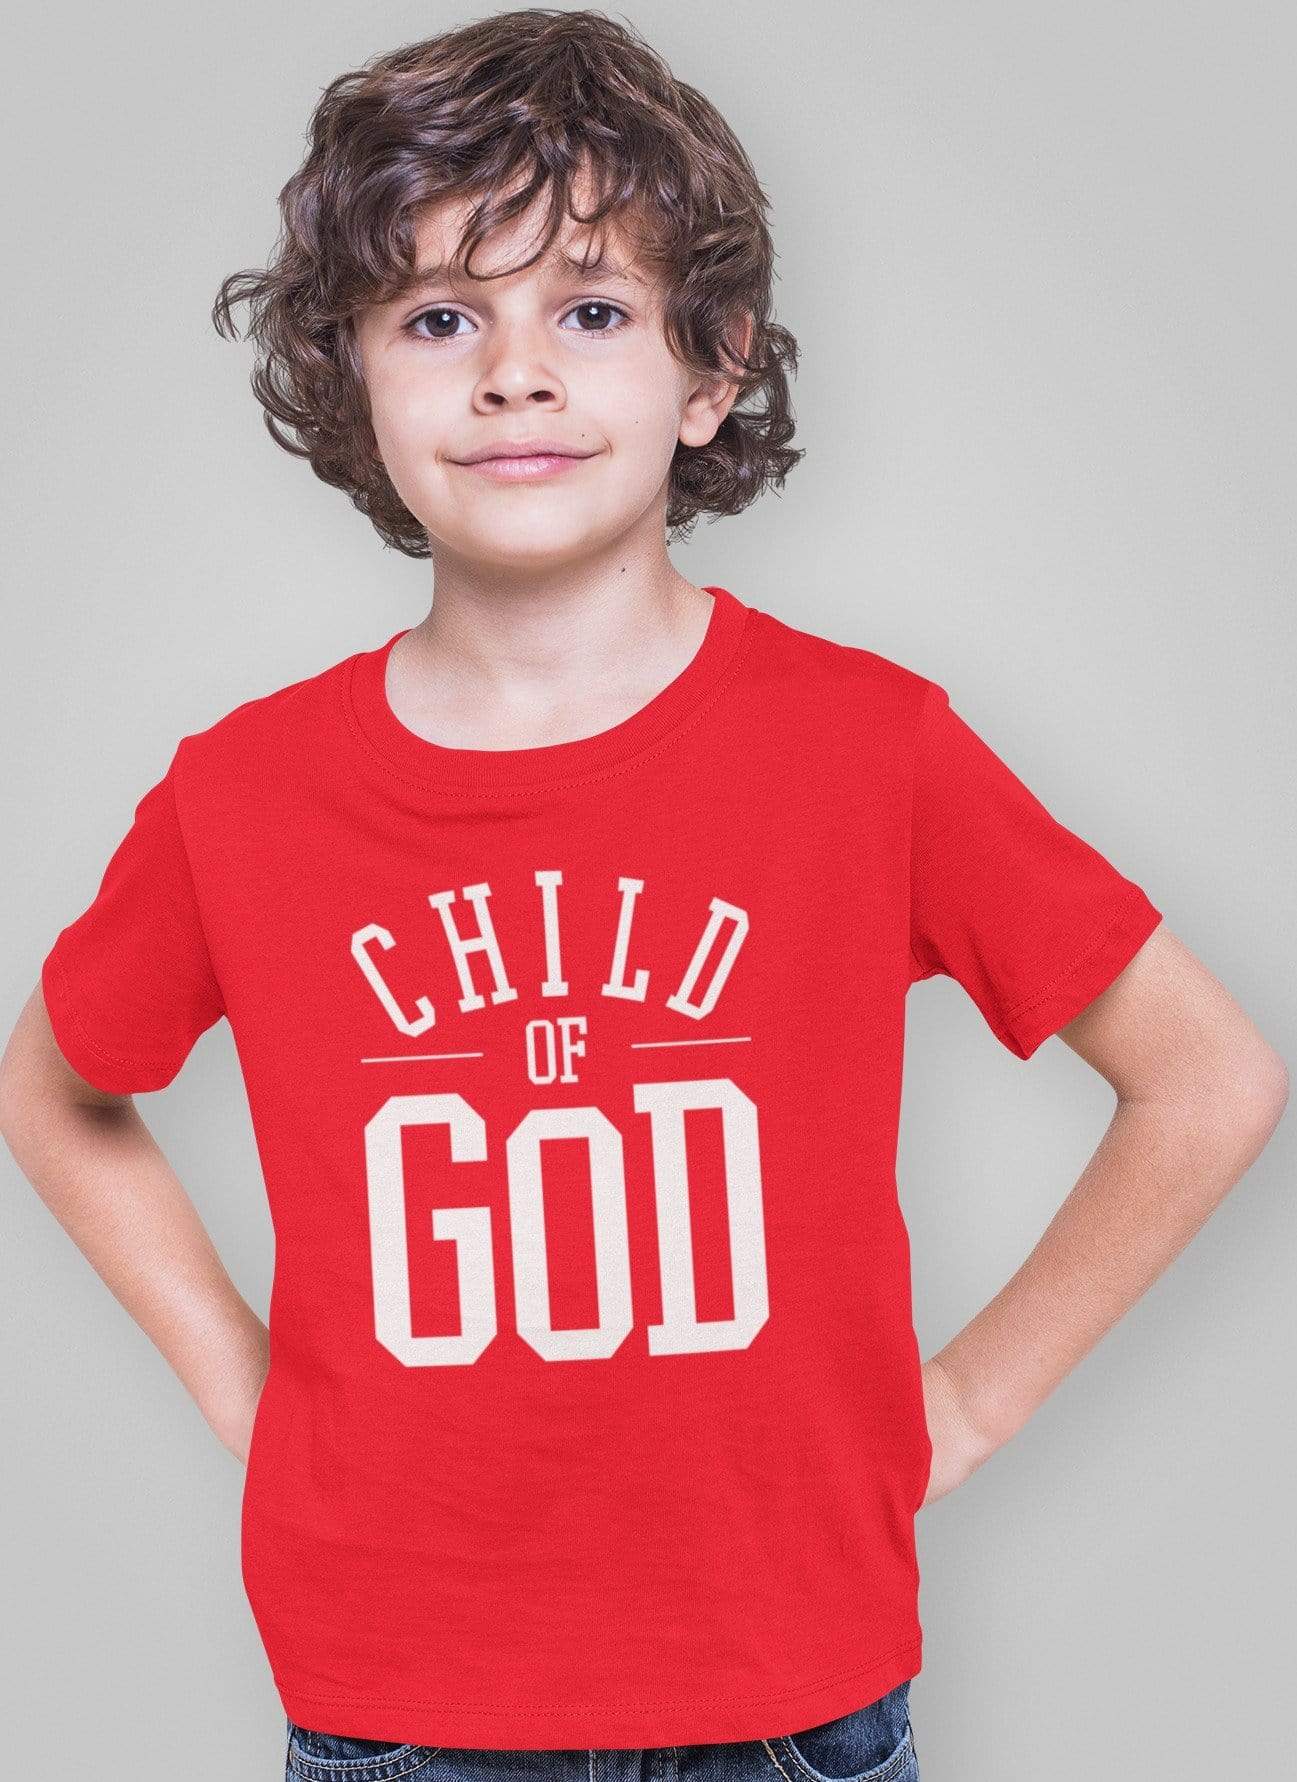 Living Words Boy Round neck Tshirt 0-11M / Red Child of God